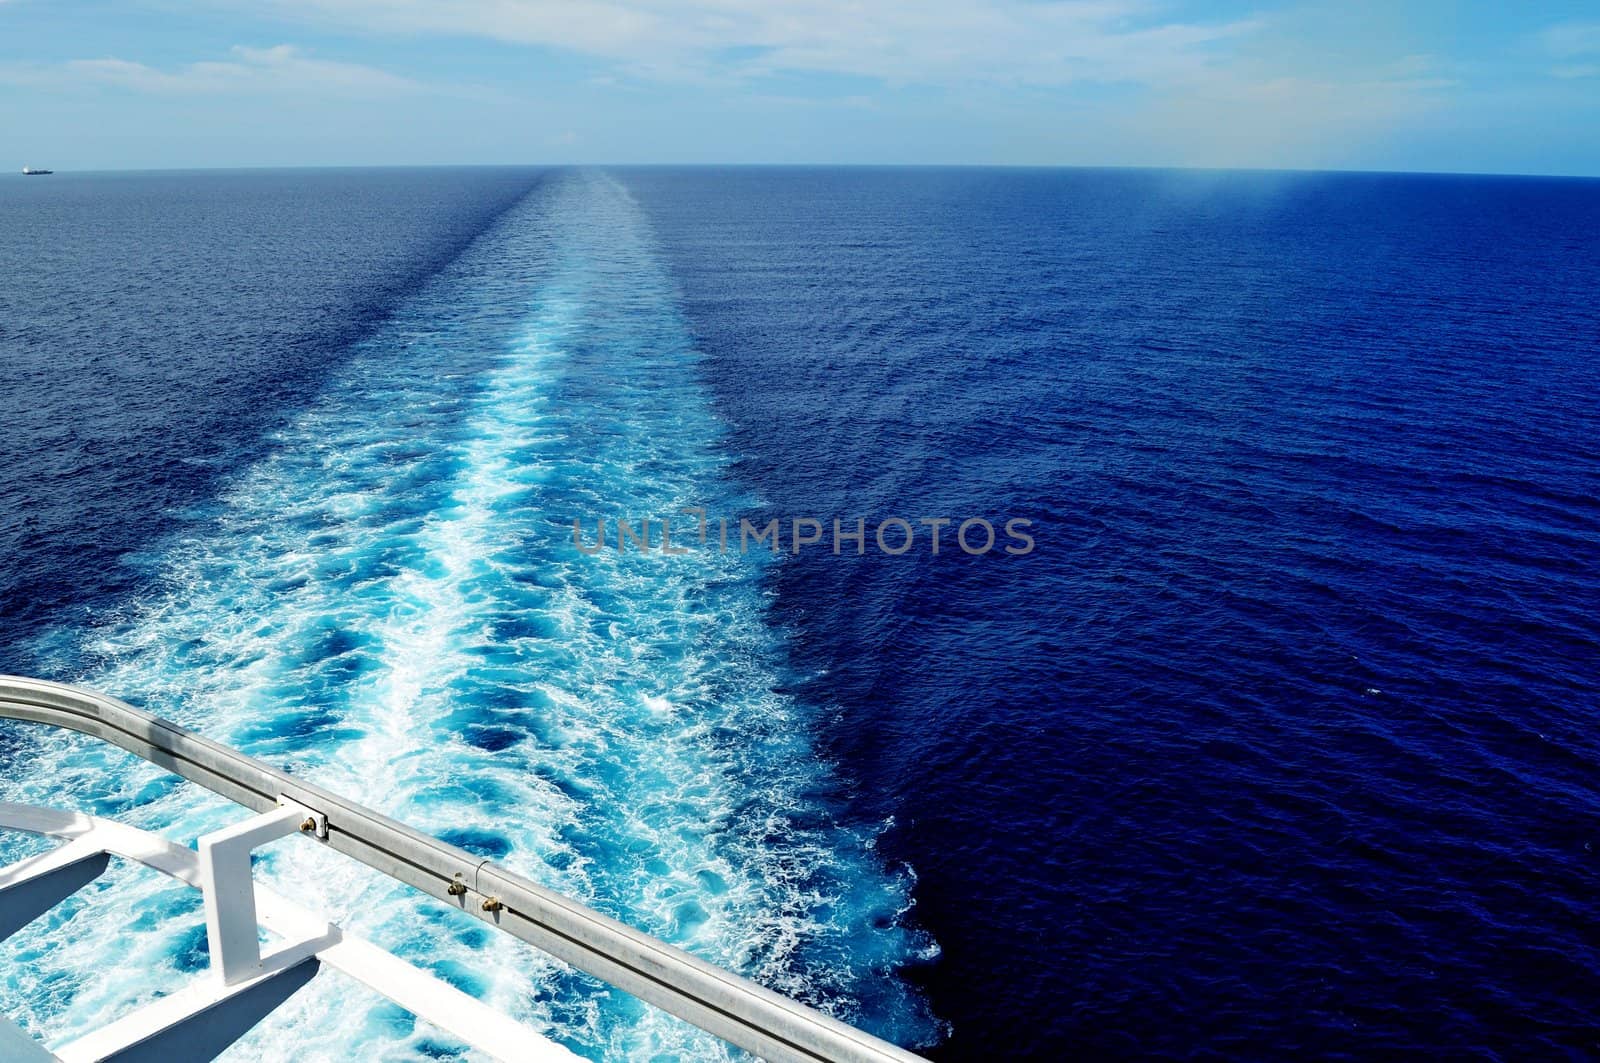 The wake of a cruise ship sailing in the Caribbean Sea.